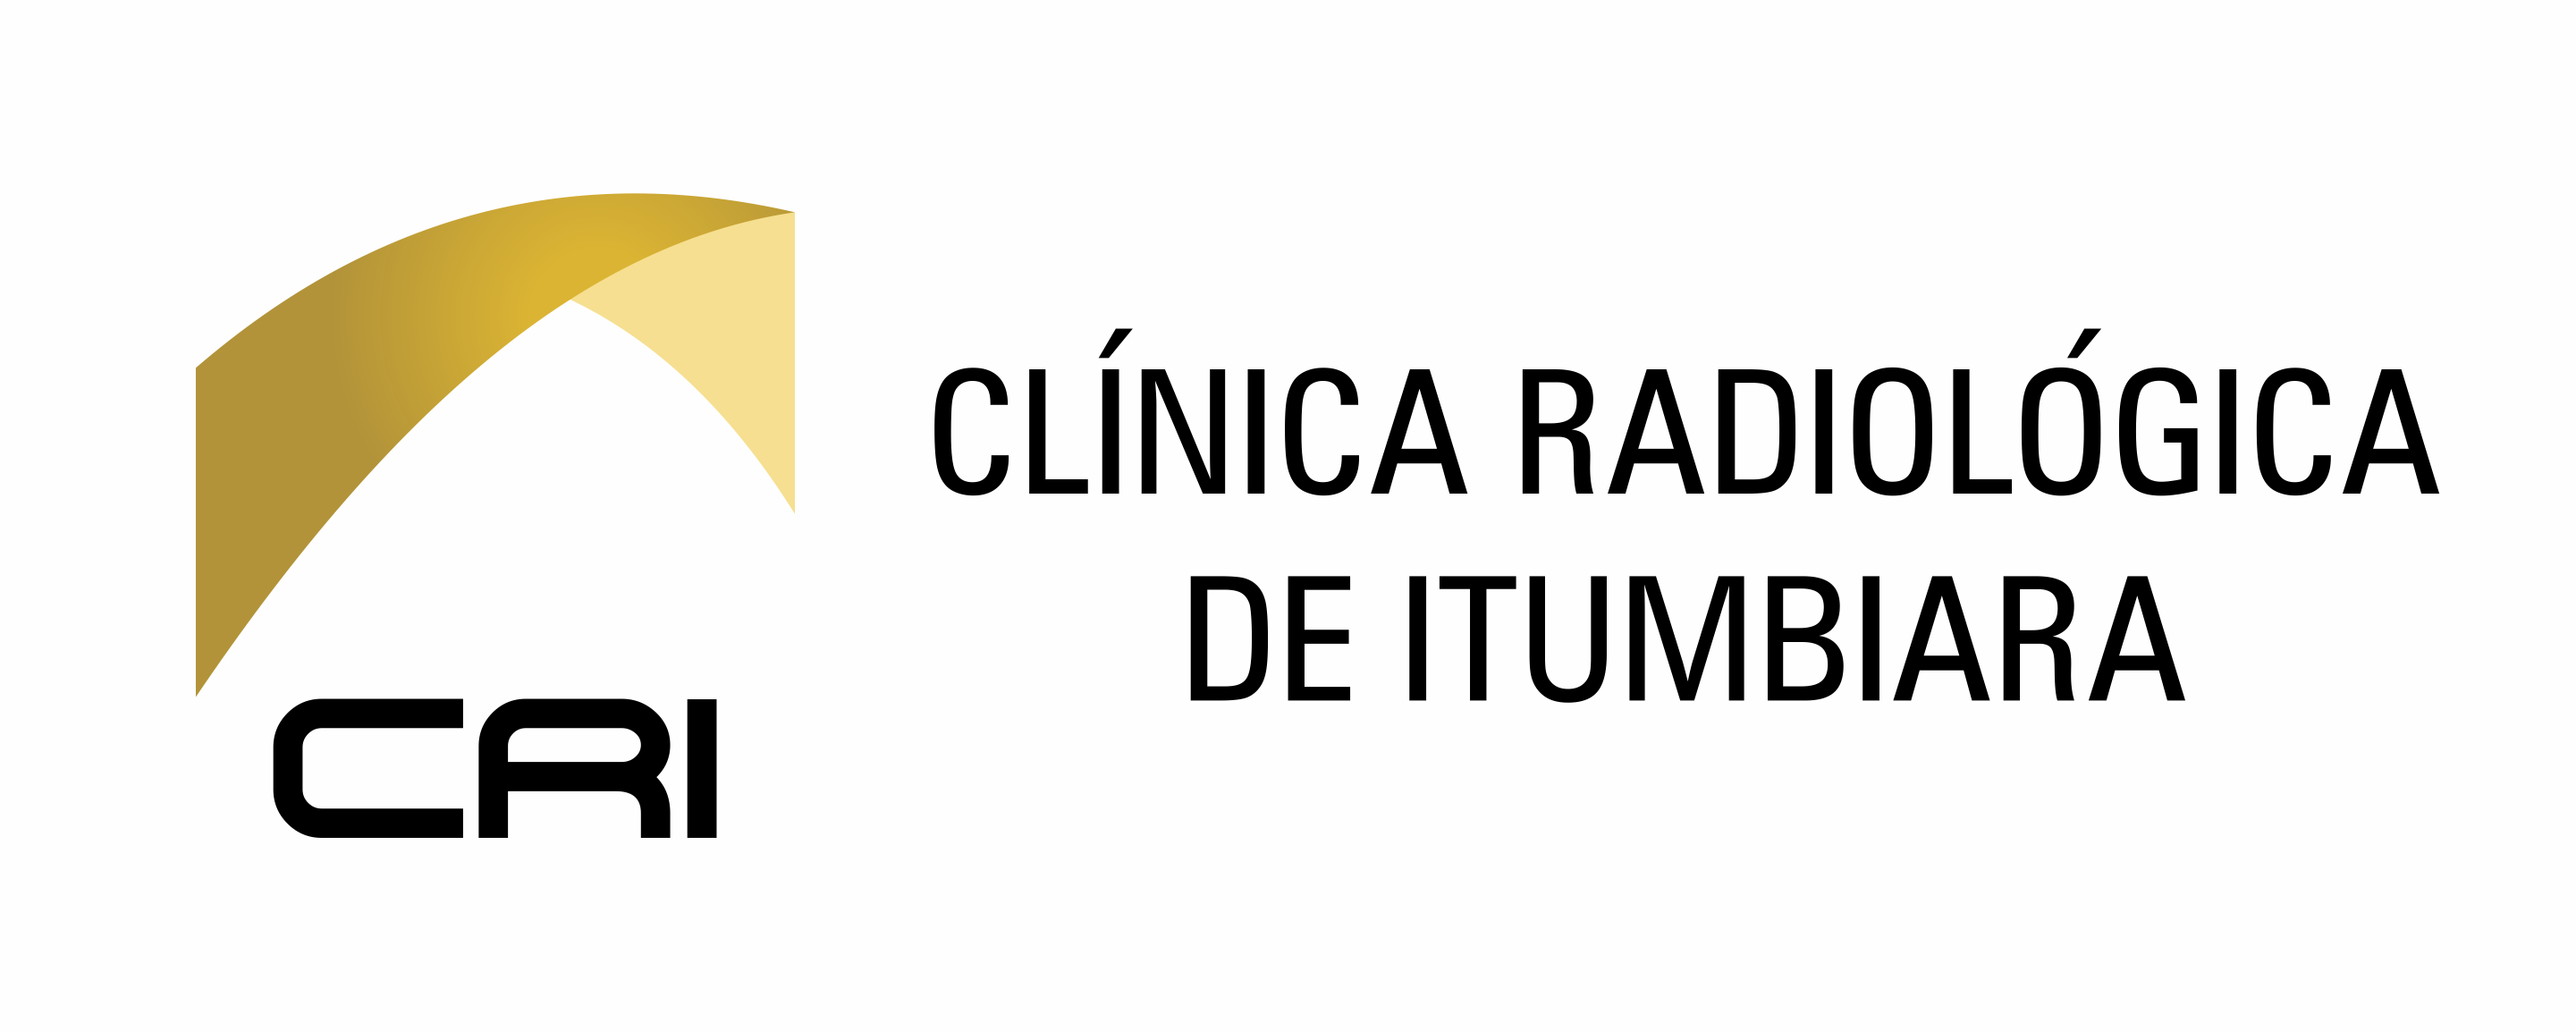 Clinica Radiologica de Itumbiara